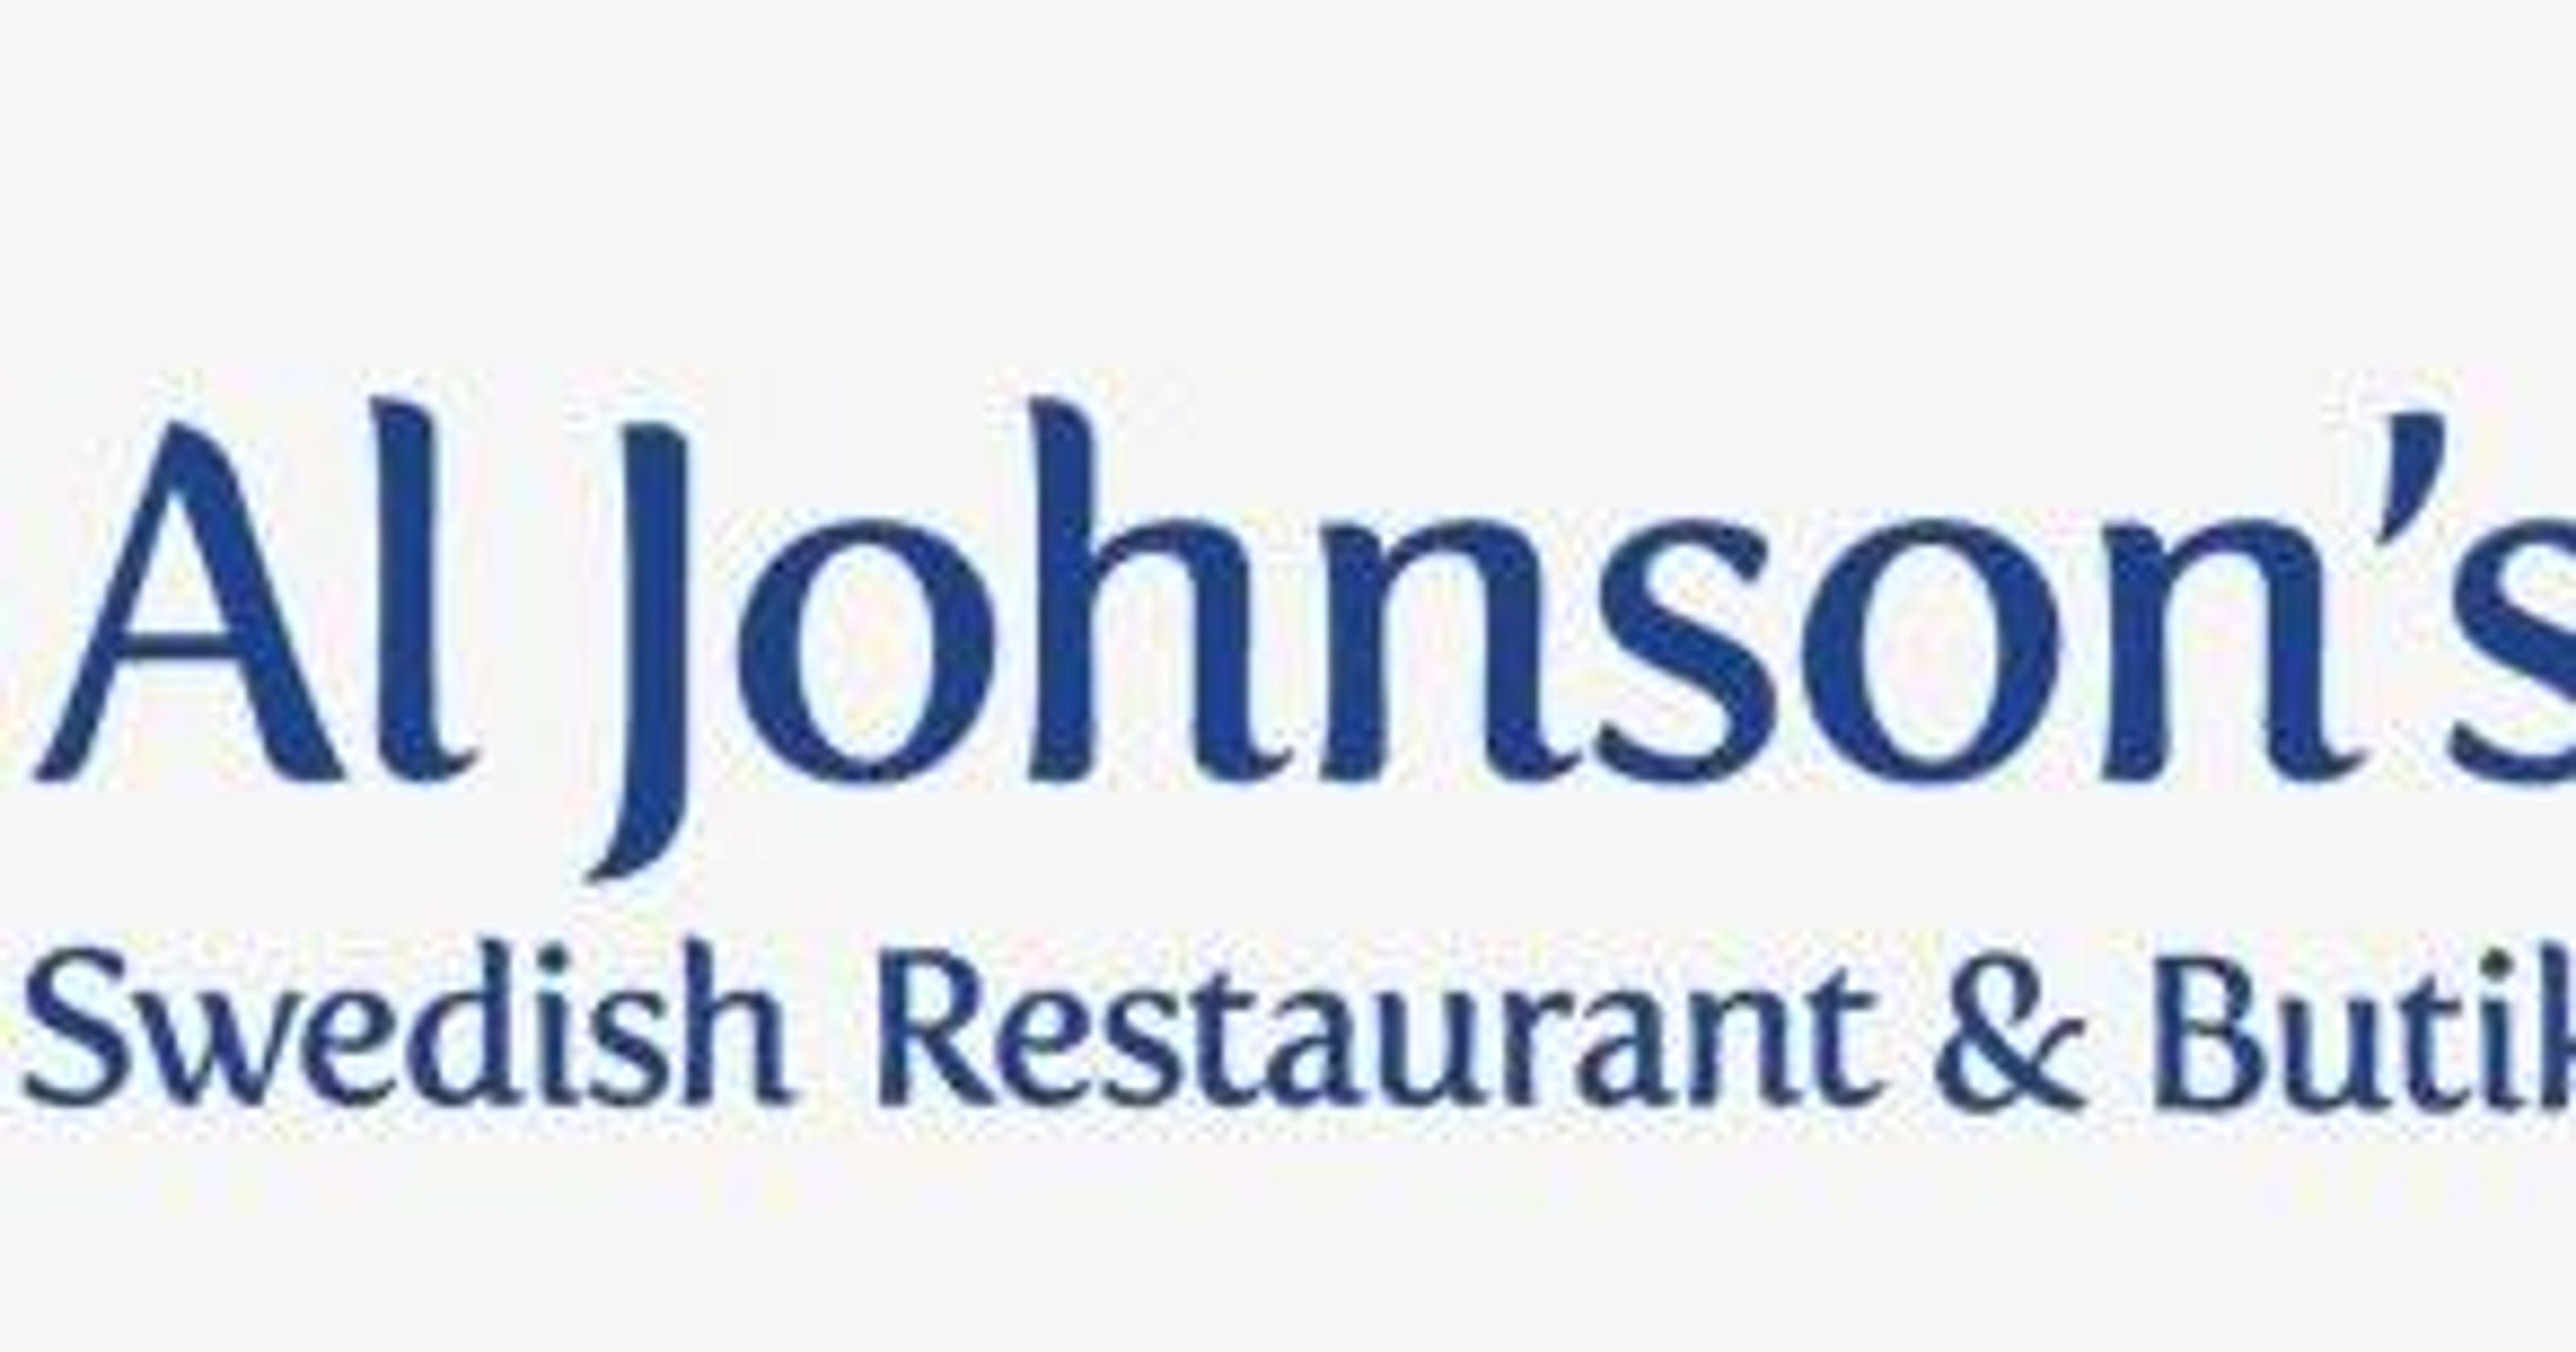 Swedish Restaurant Logo - Al Johnson's Swedish Restaurant wins award